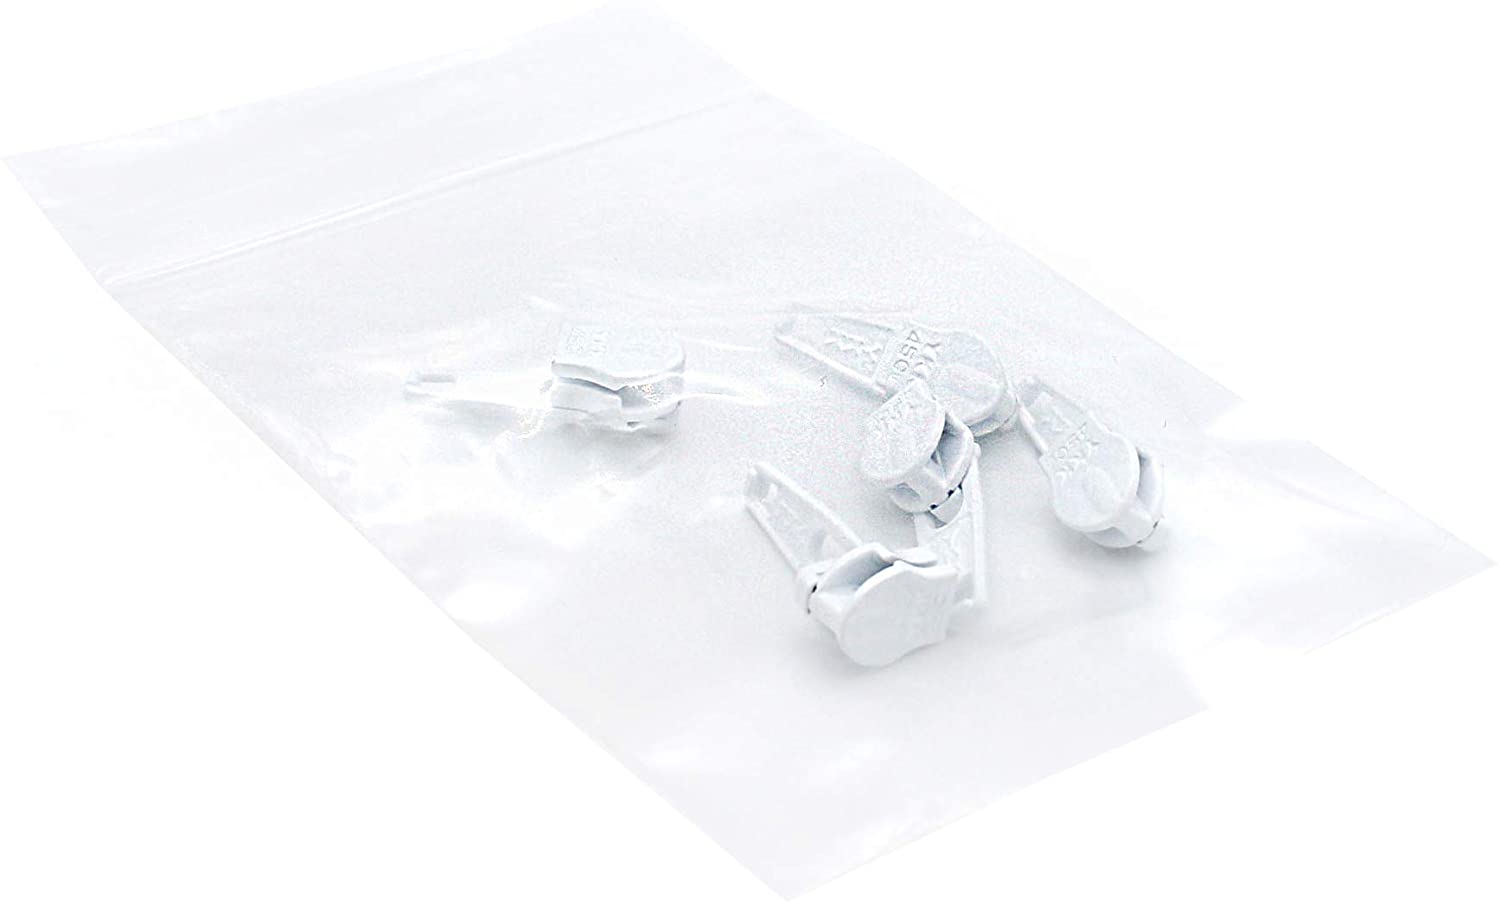 Zipper Repair Kit - #4.5 YKK Coil Automatic Lock Jacket Sliders - 5 Sl